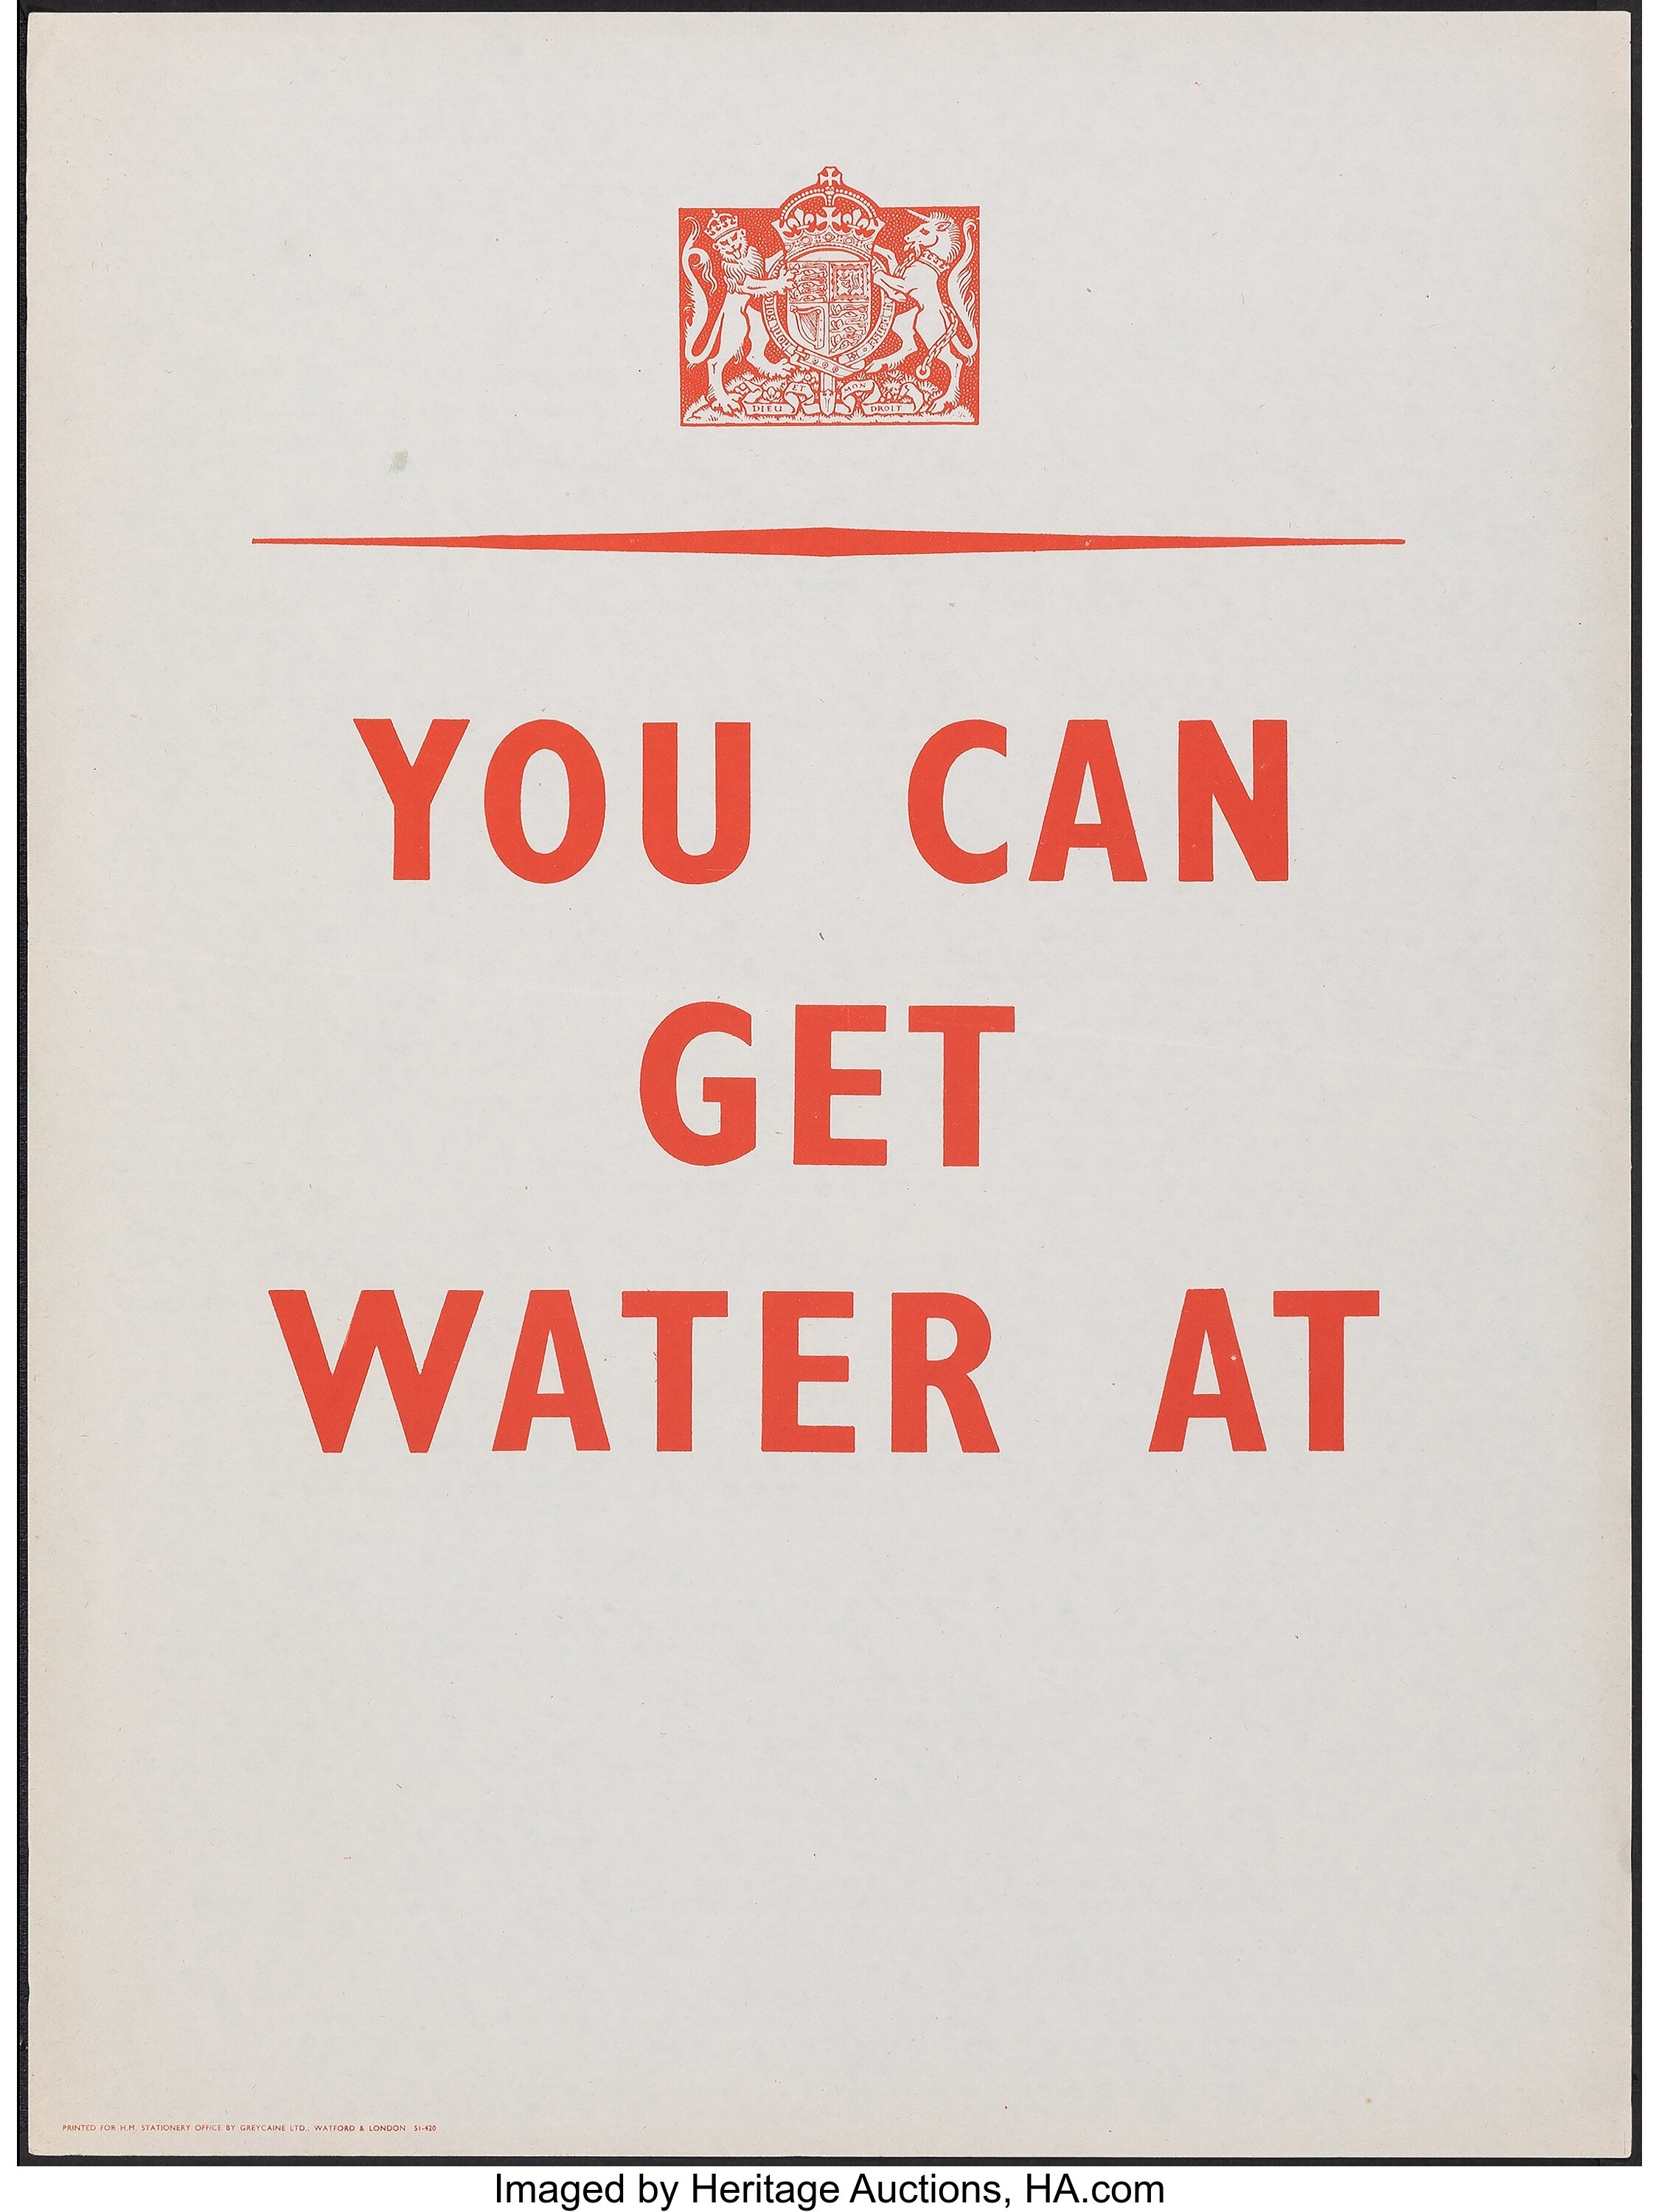 World War II Propaganda (Her Majesty's Stationery Office, 1940s). | Lot  #51532 | Heritage Auctions